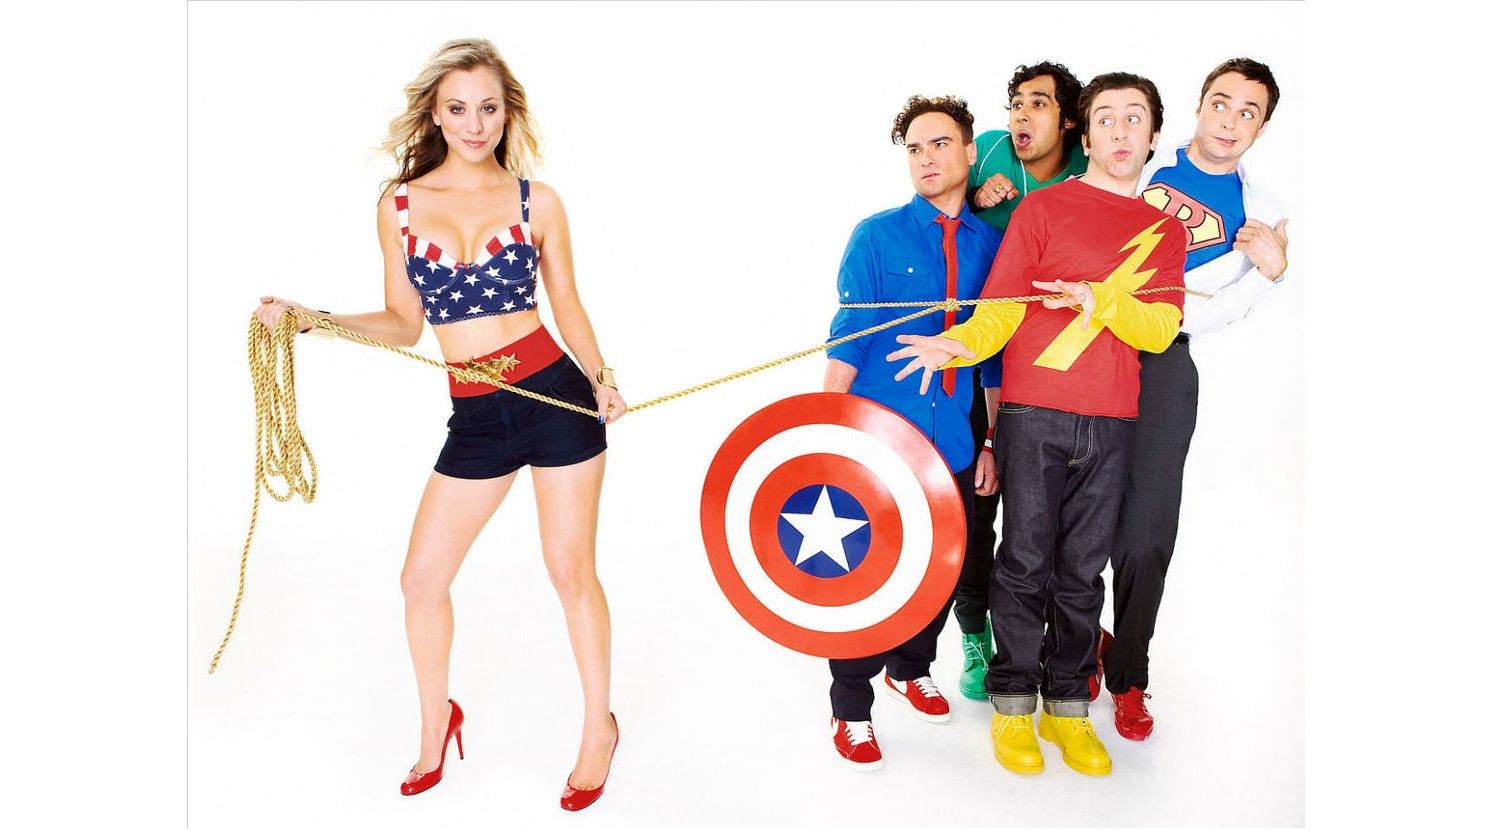 Big Bang Theory -- Penny, Leonard, Raj, Howard and Sheldon